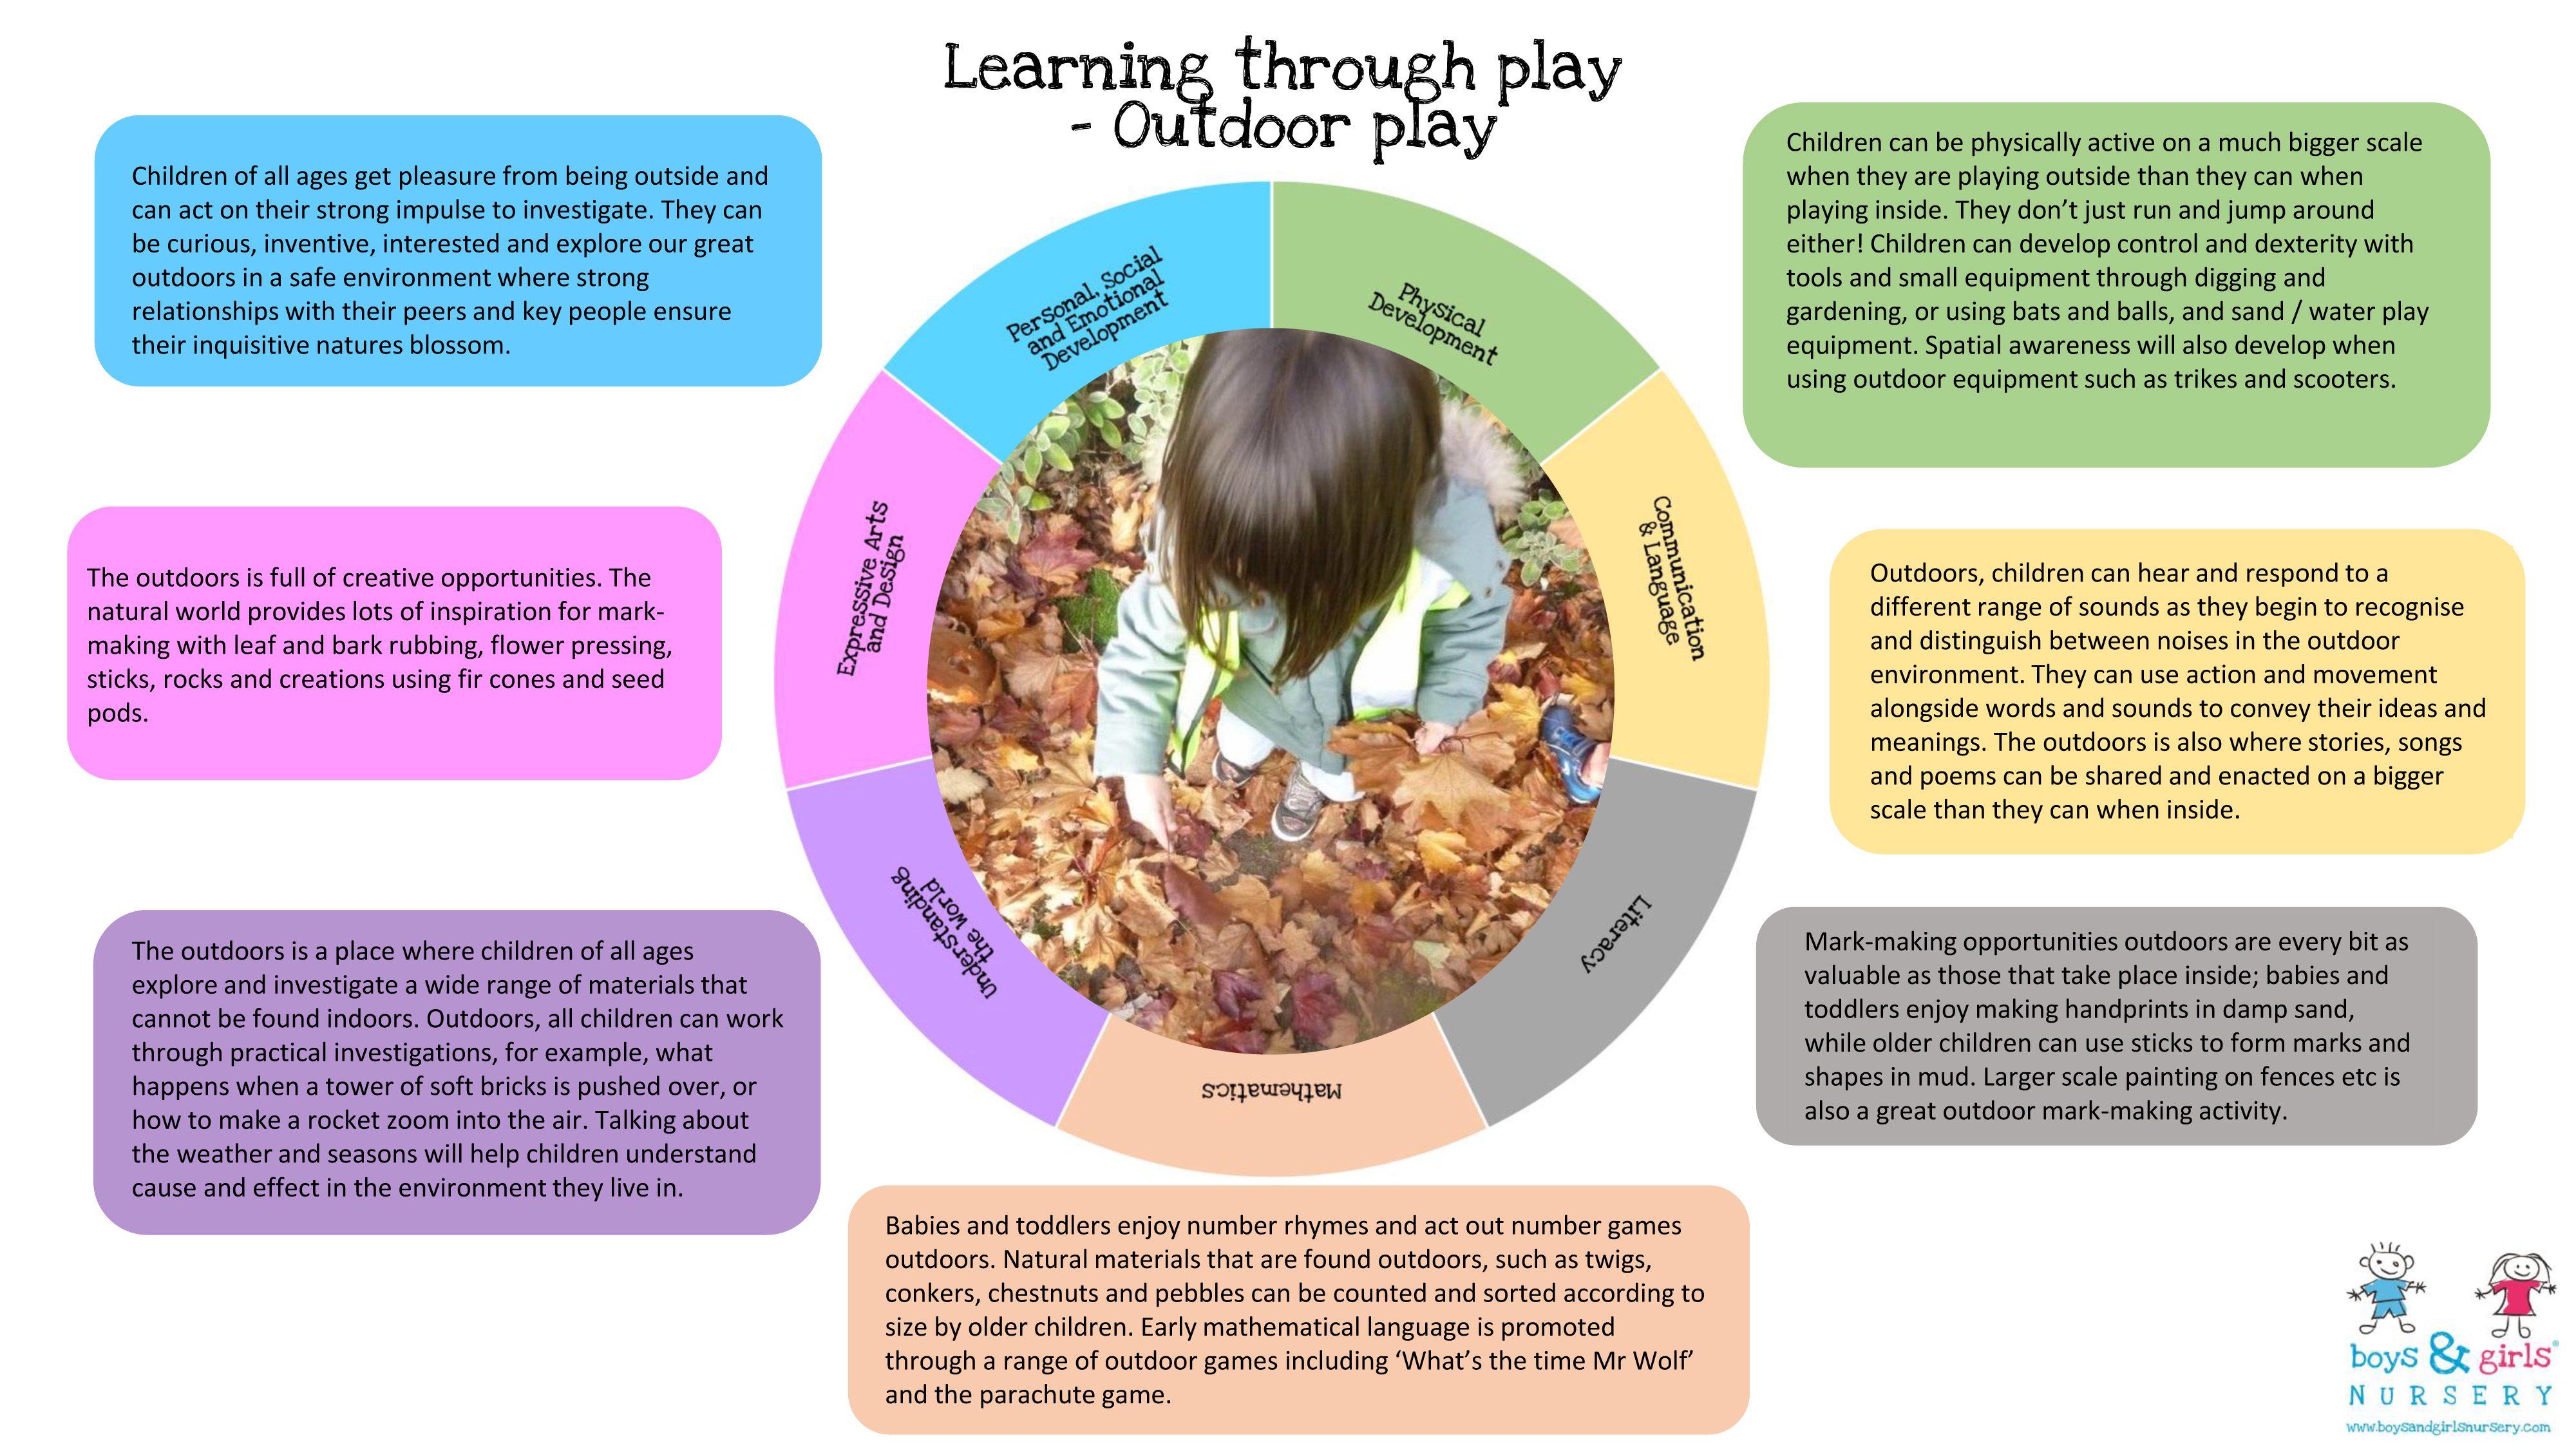 learning-through-play-the-boys-girls-nursery-way-outdoor-play